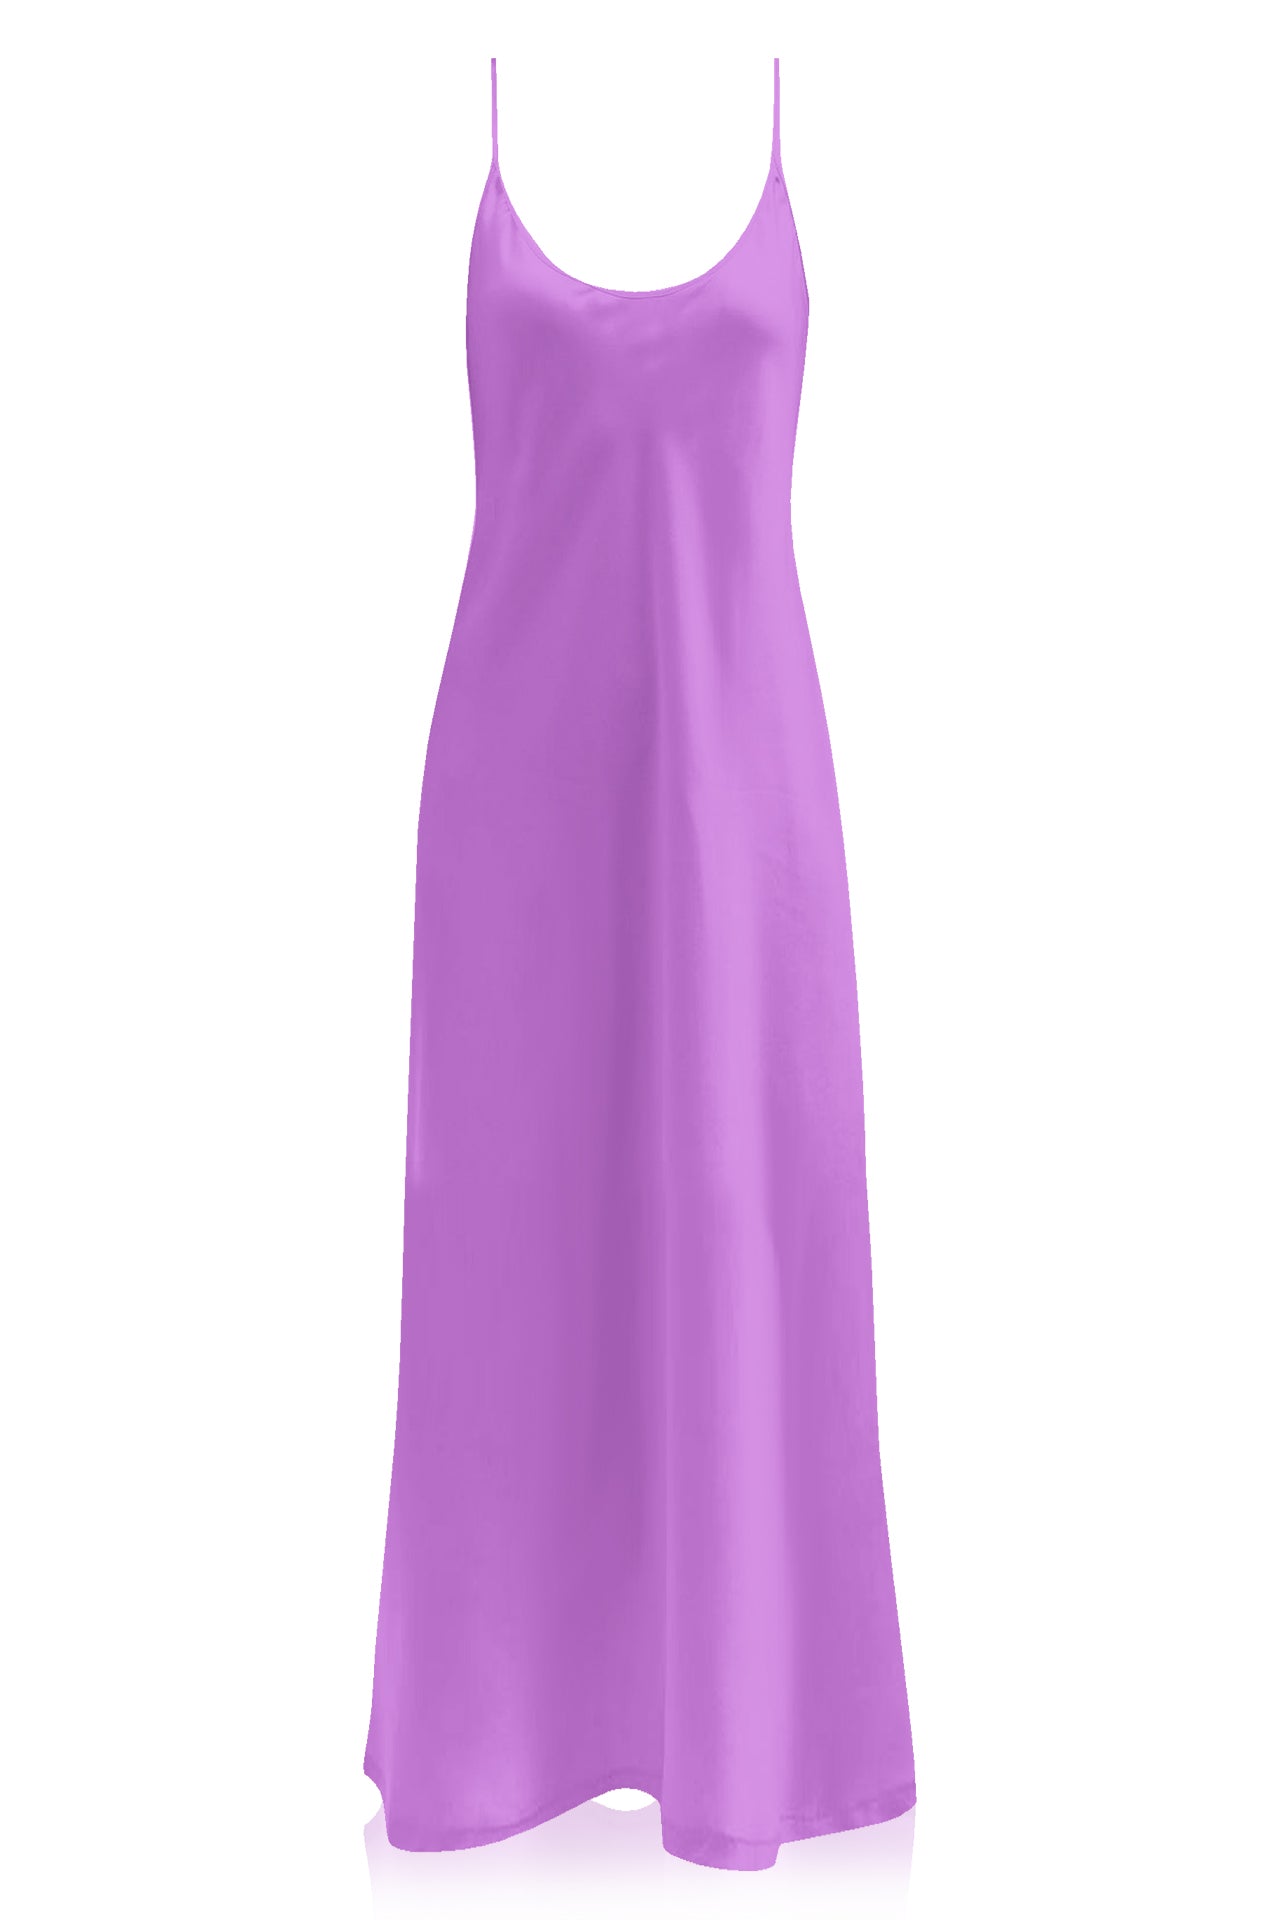 "Kyle X Shahida" "long camisole slip" "purple slip dress" "maxi dress with slip"